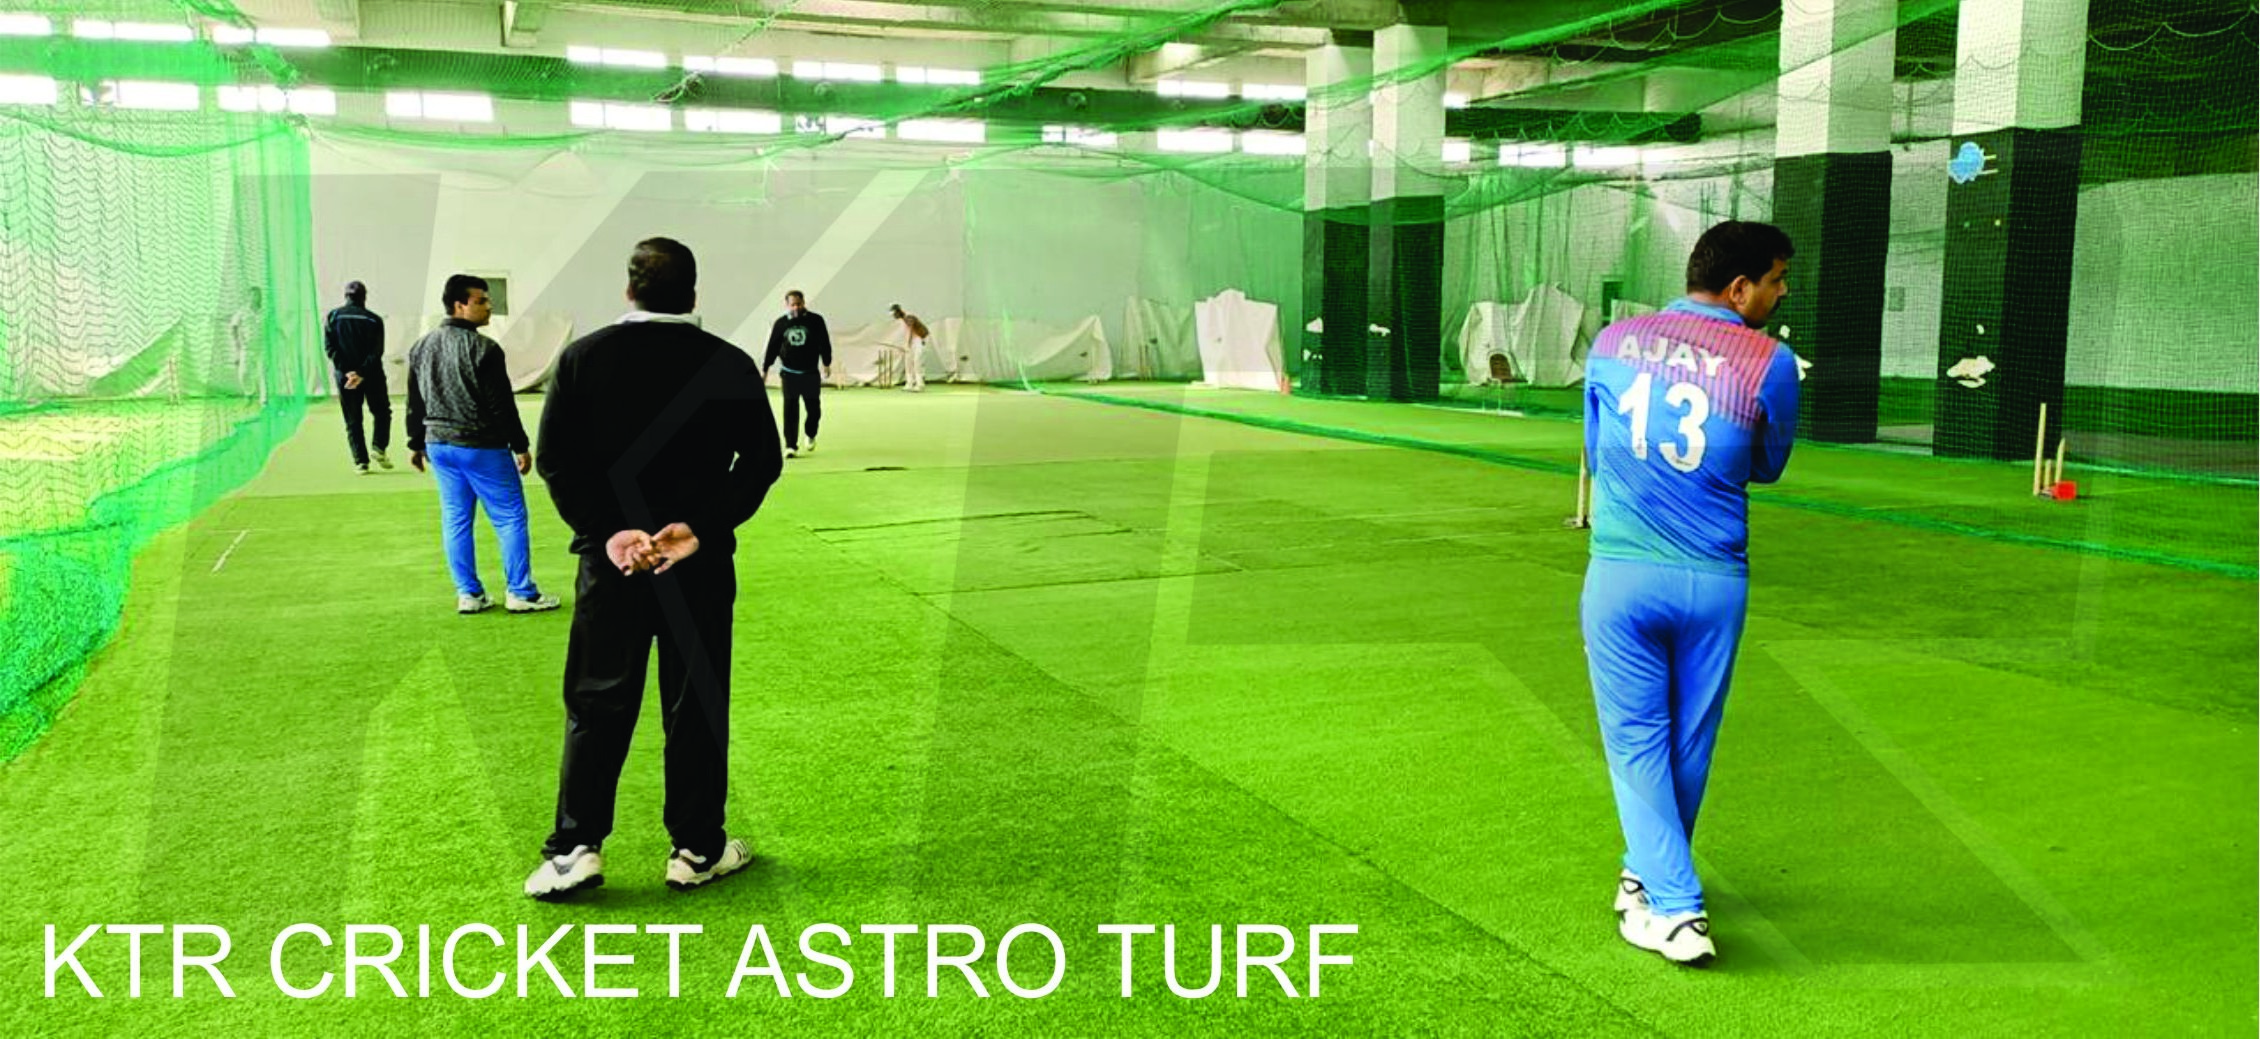 Cricket Astro Turf Cricket Turf Cricket Pitch Buy Online Astro Turf